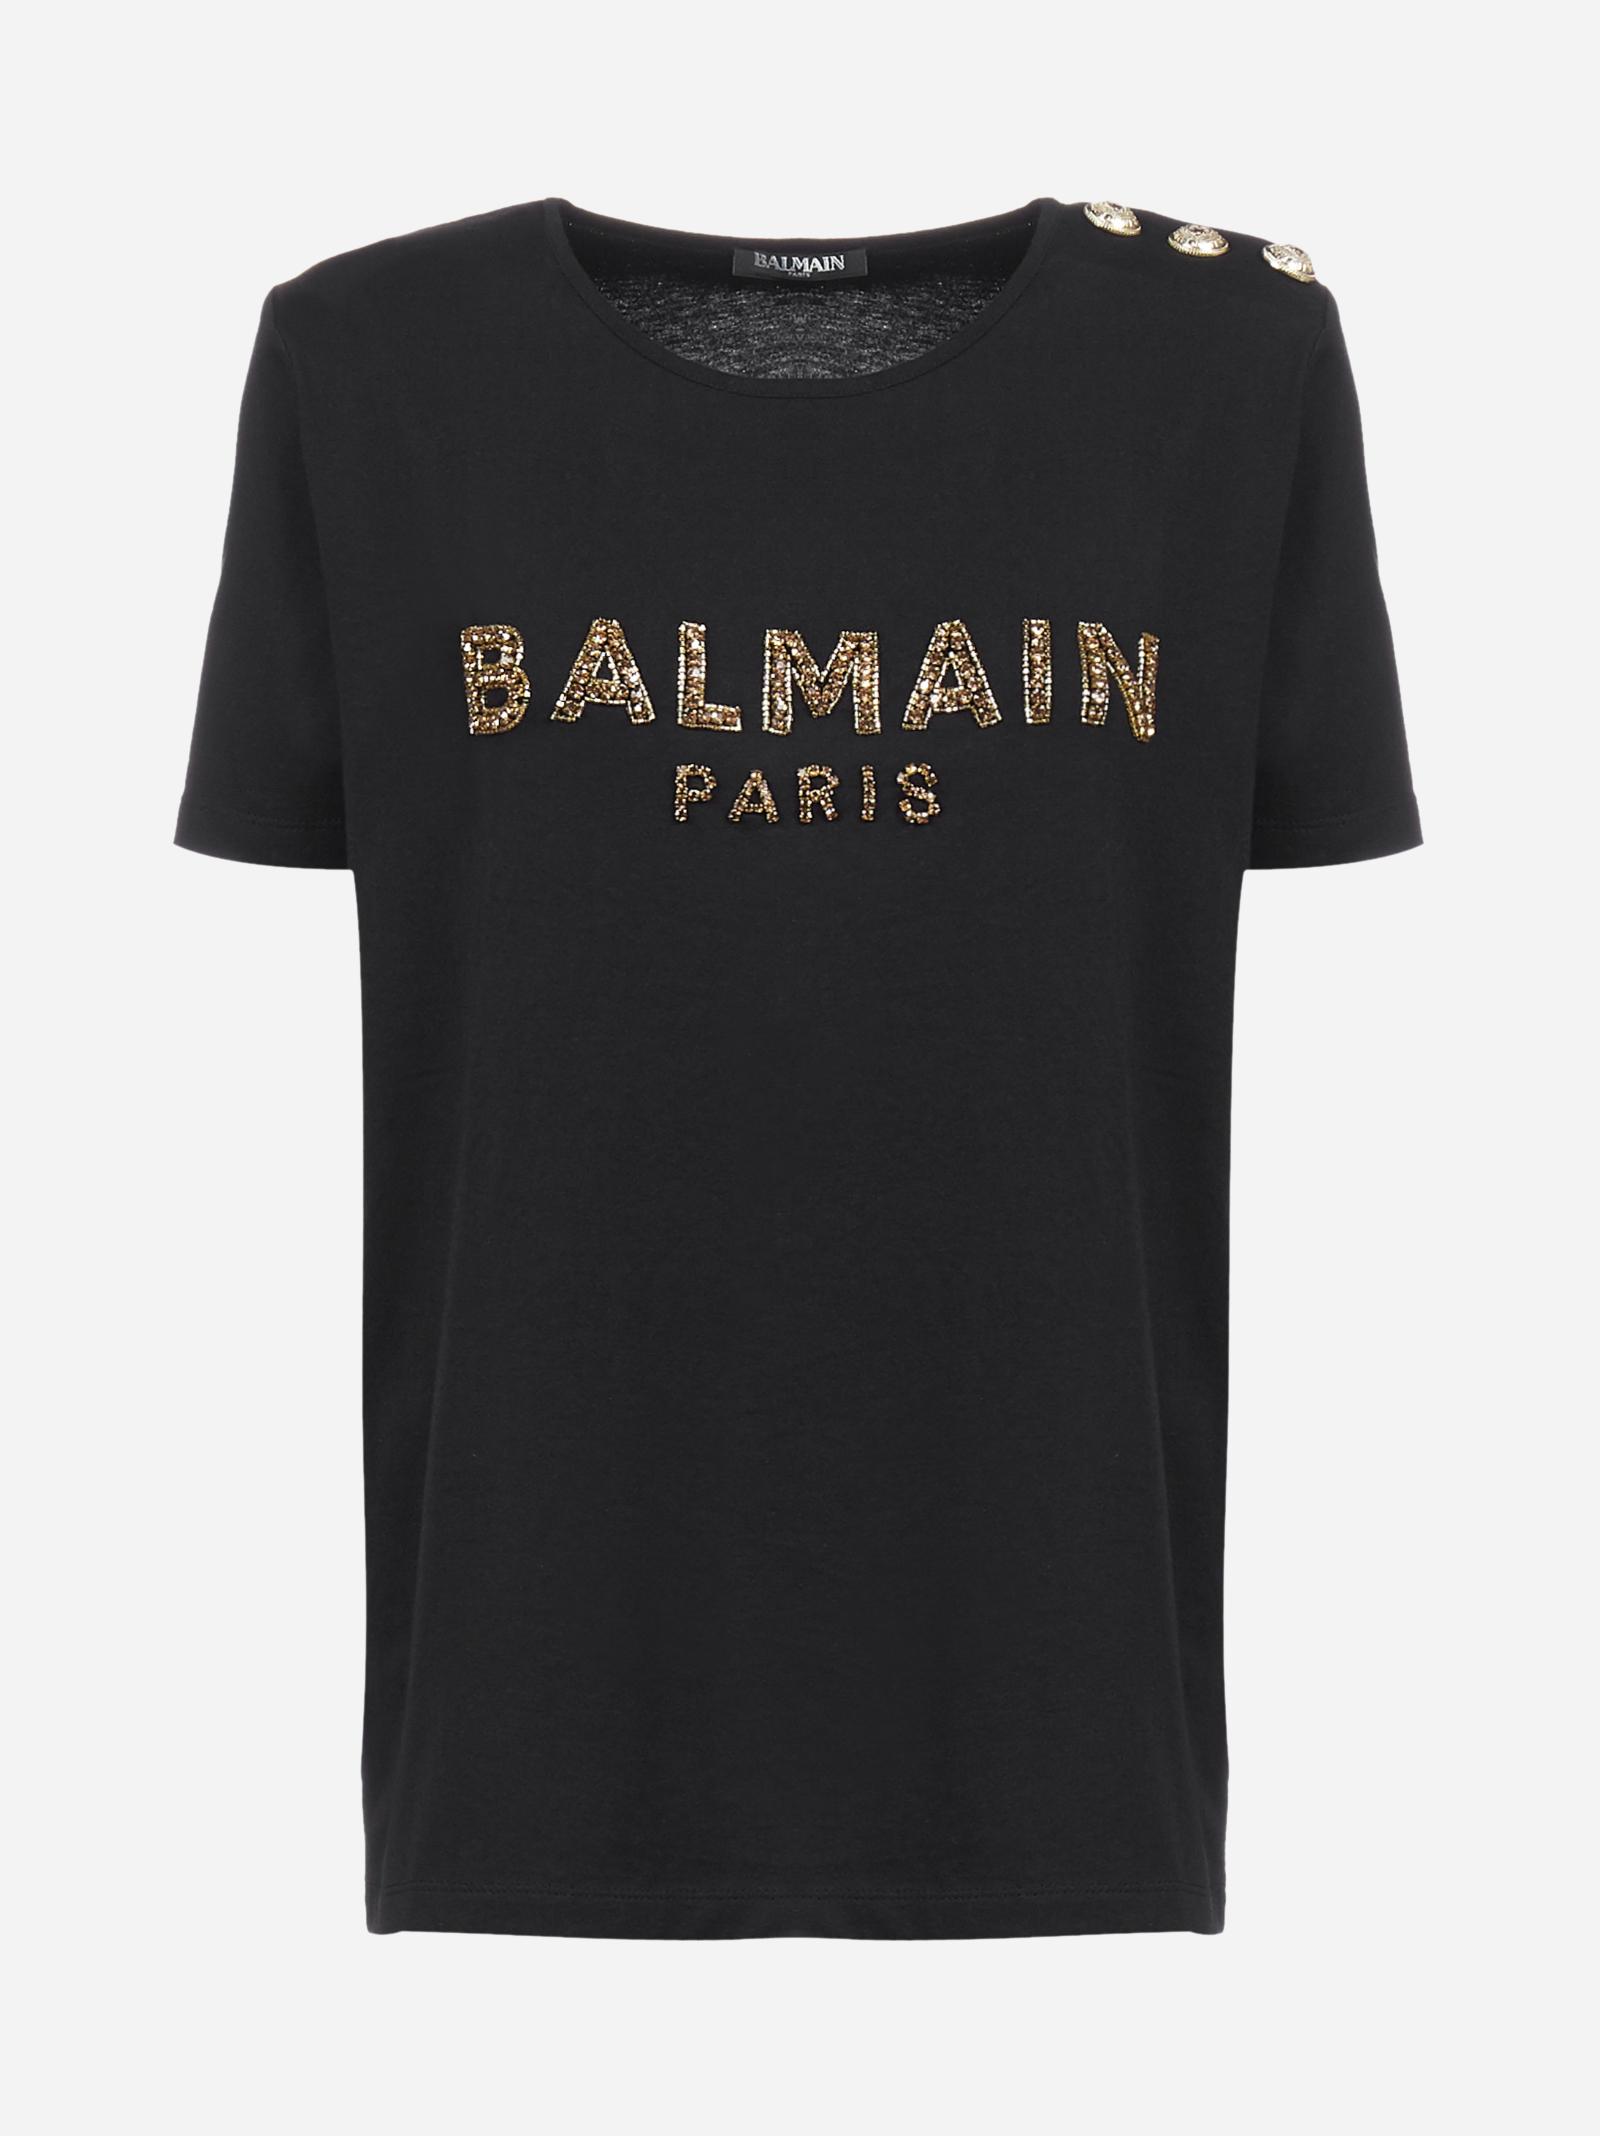 Balmain Rhinestone Embroidered Logo Cotton T-shirt in Black - Lyst